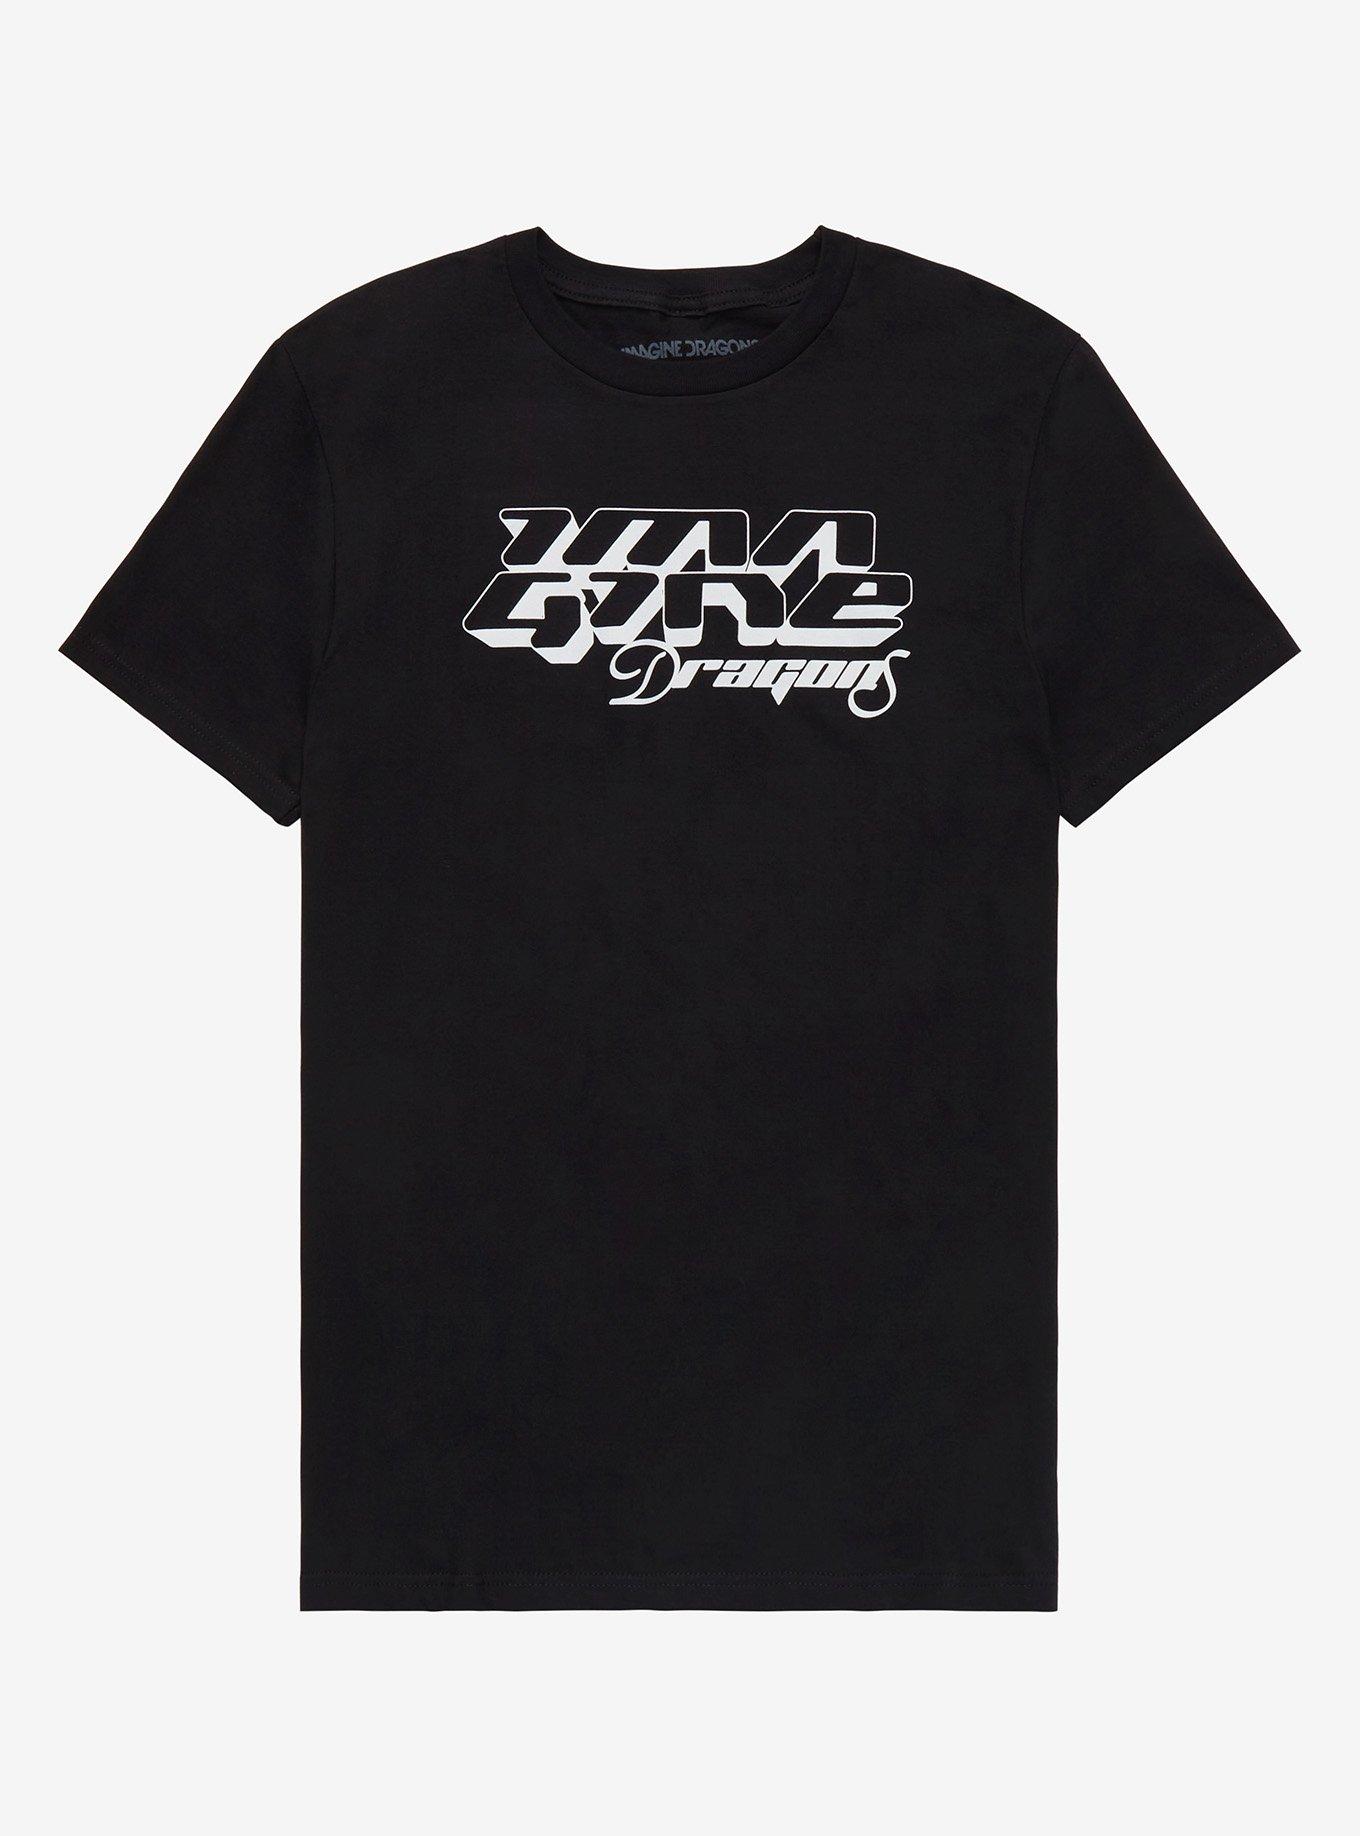 Imagine Dragons Falling Man T-Shirt, BLACK, hi-res